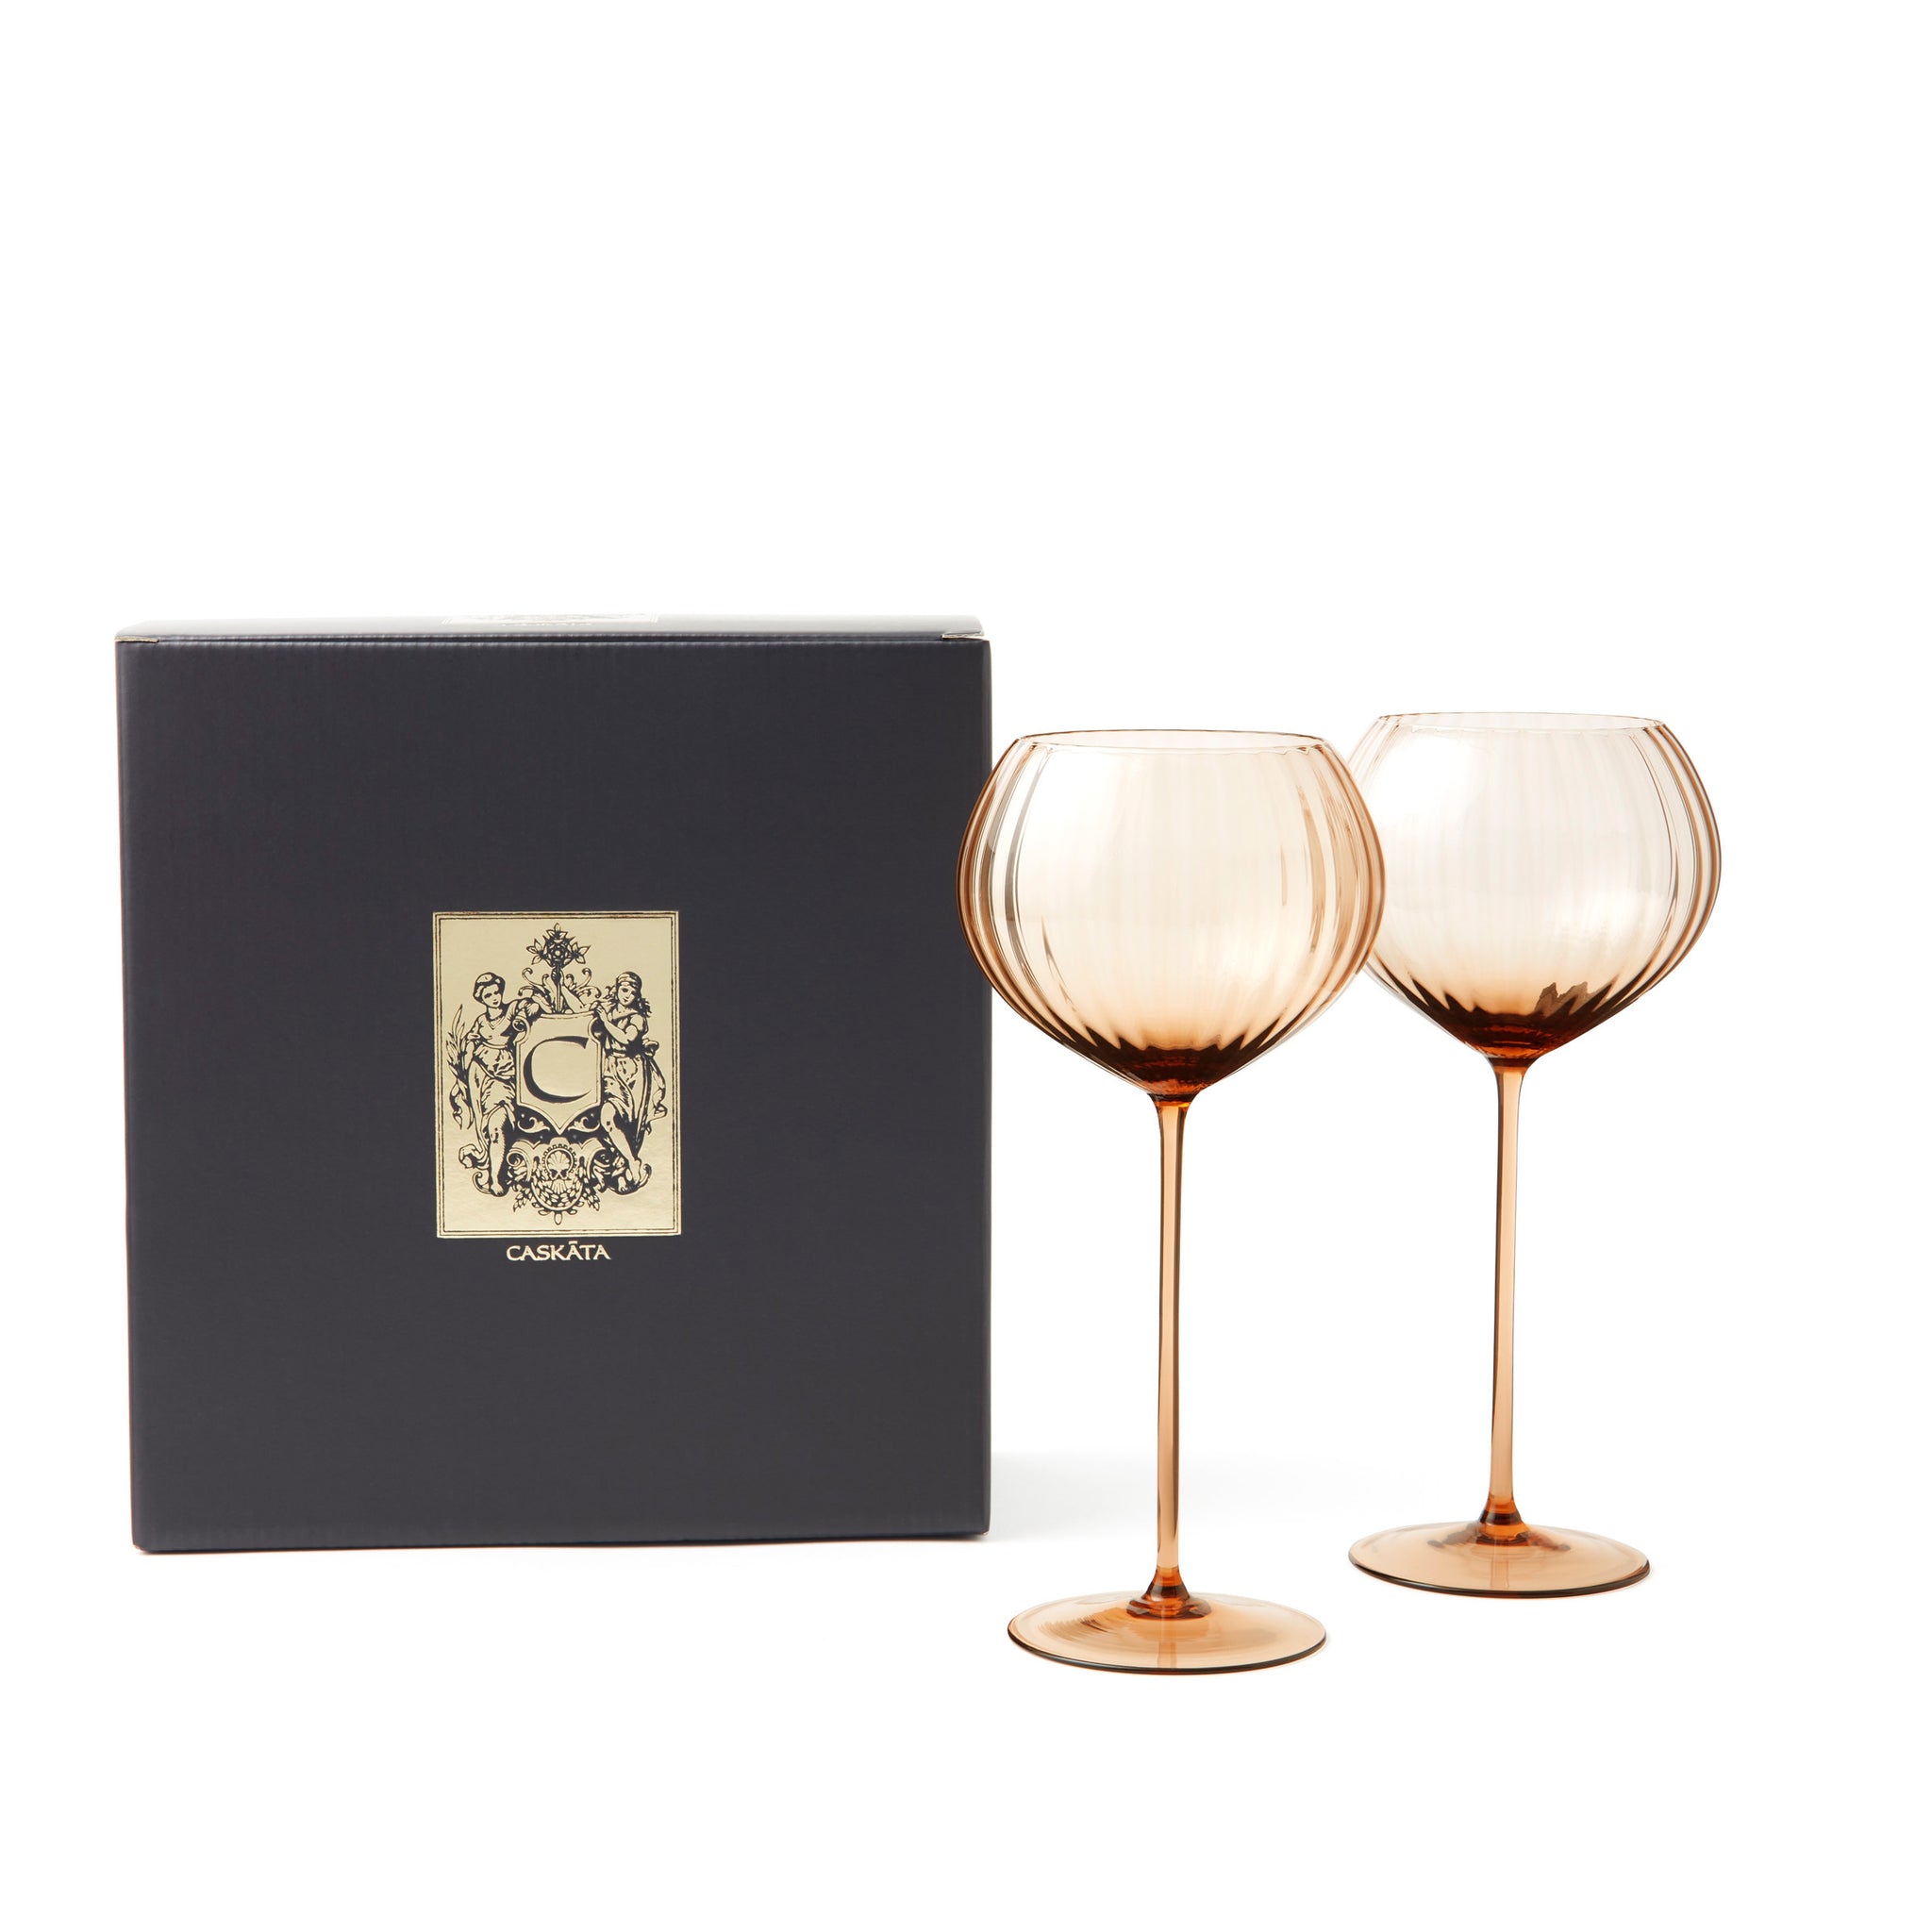 4 Vintage Amber Wine Glasses, Set of 4, Vintage Amber Optic Wine Glasses,  Vintage Cocktail Wine Glasses, Unique Amber Wine glasses